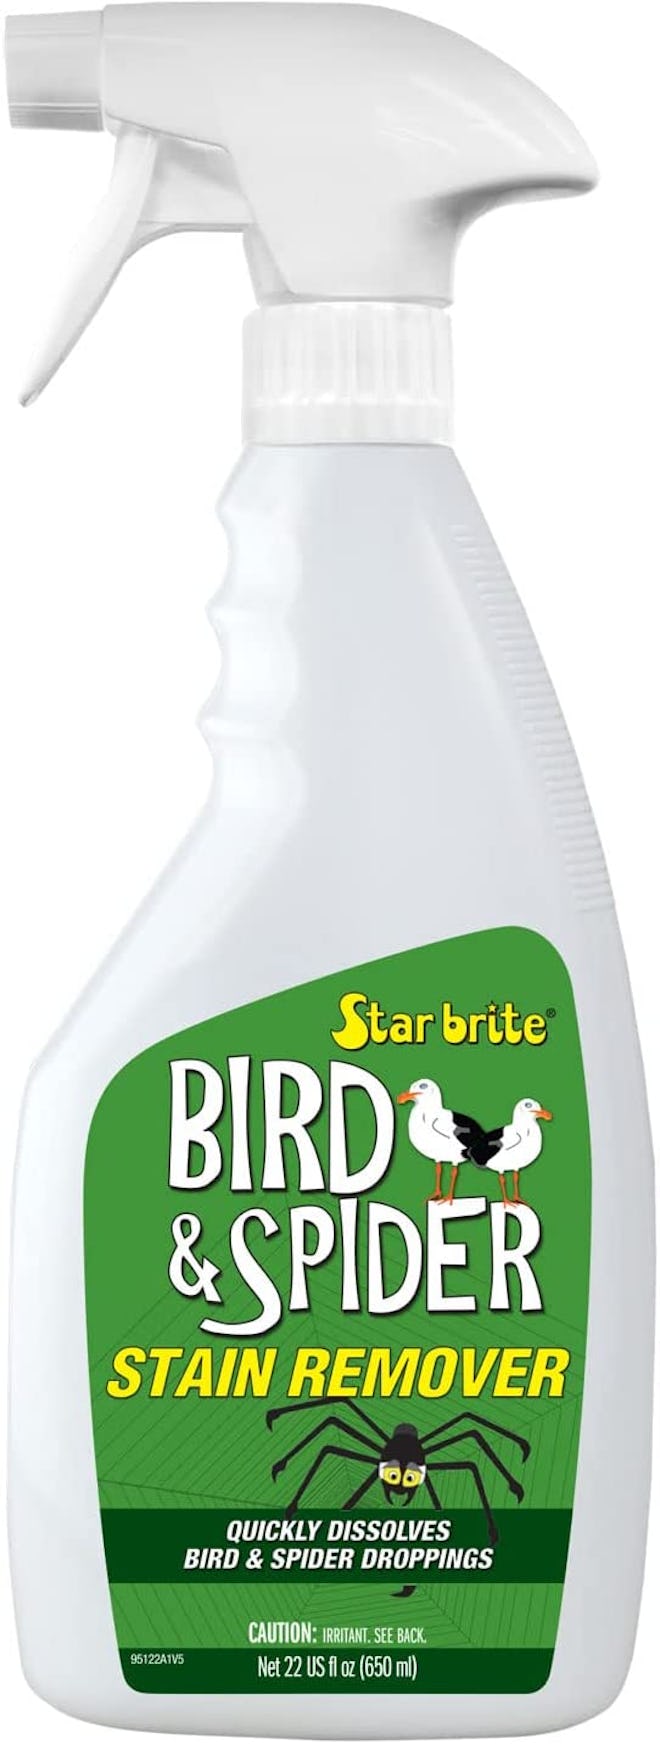 STAR BRITE Bird and Spider Stain Remover